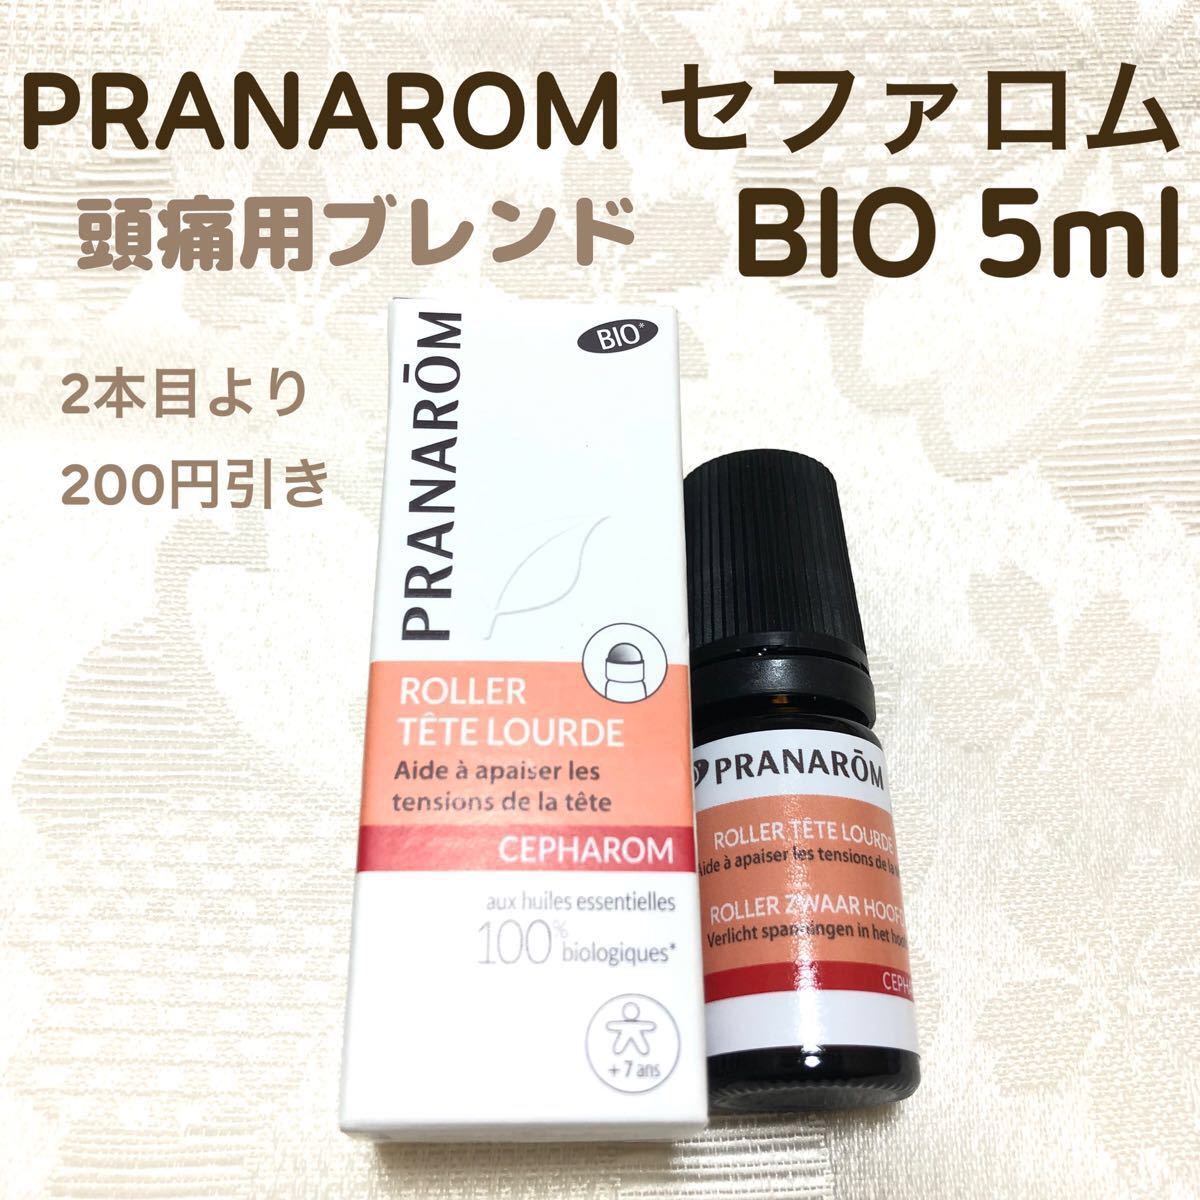 PRANAROM 【セファロム】BIO 頭痛用ブレンドローラー 5ml プラナロム